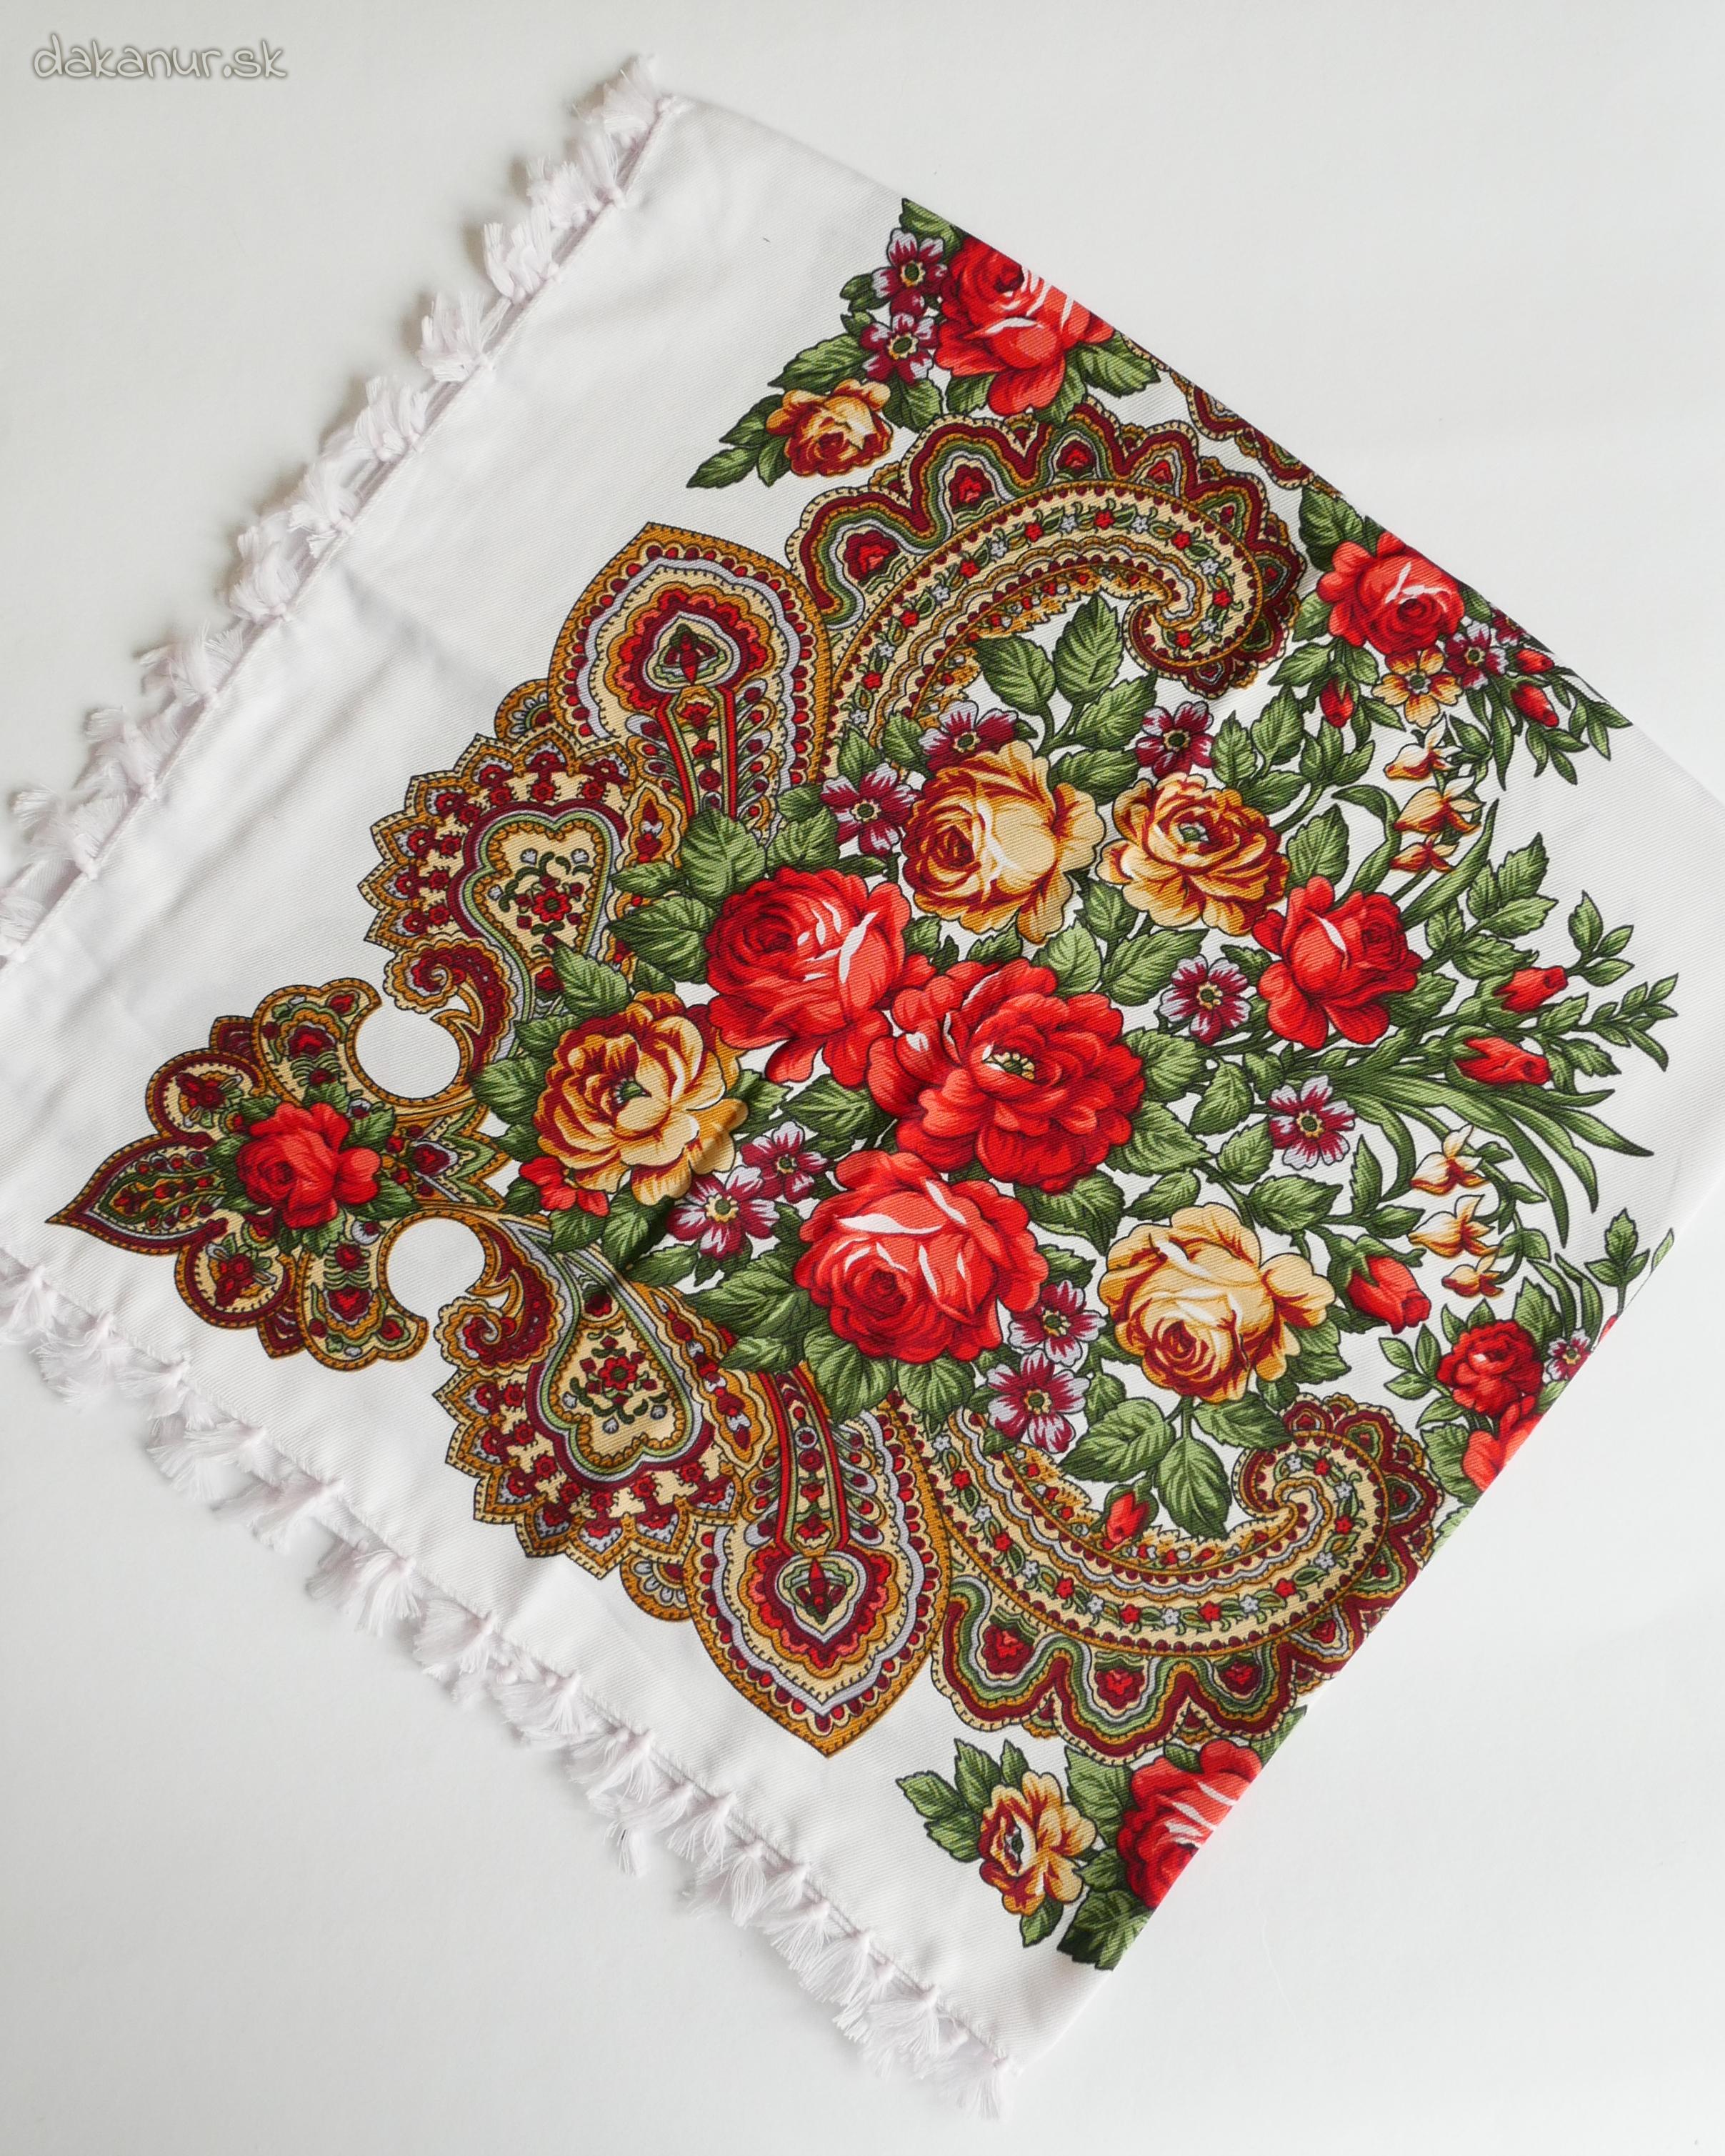 Tradičná kvetovaná bielokrémová folklórna šatka, hustka, chustka